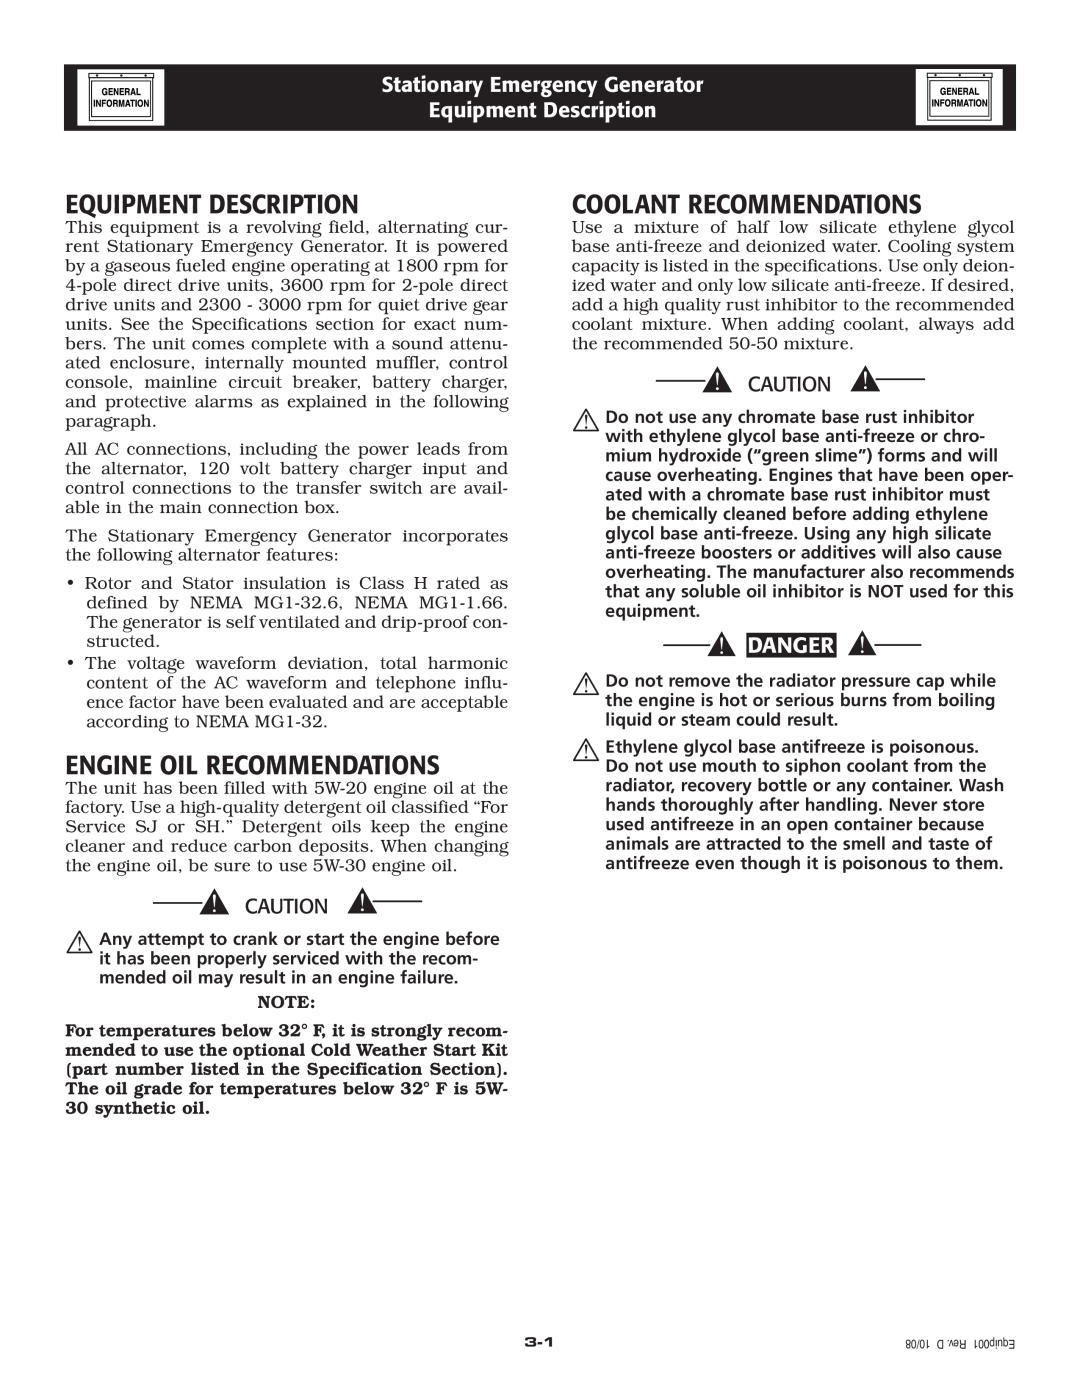 Grandstream Networks 005261-0 Equipment Description, Engine Oil Recommendations, Coolant Recommendations, Danger 